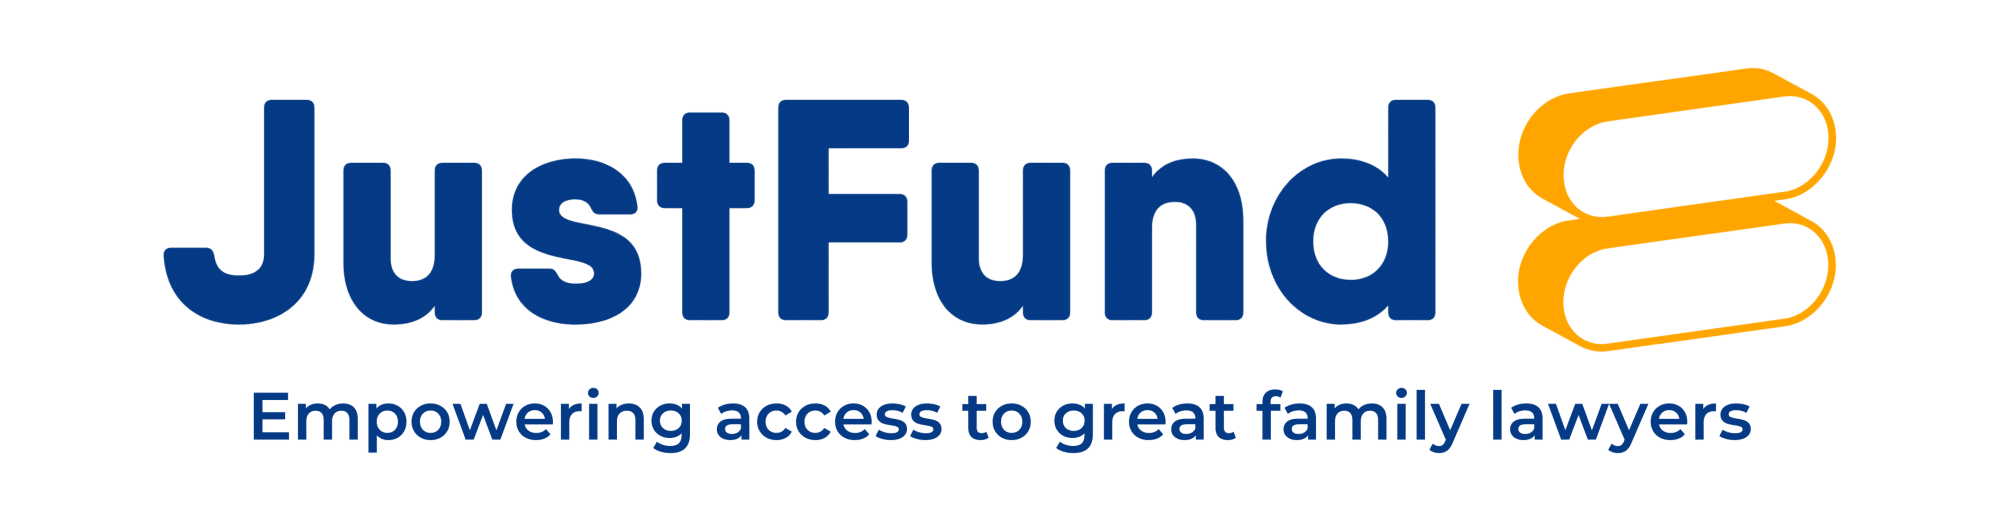 Just fund partner